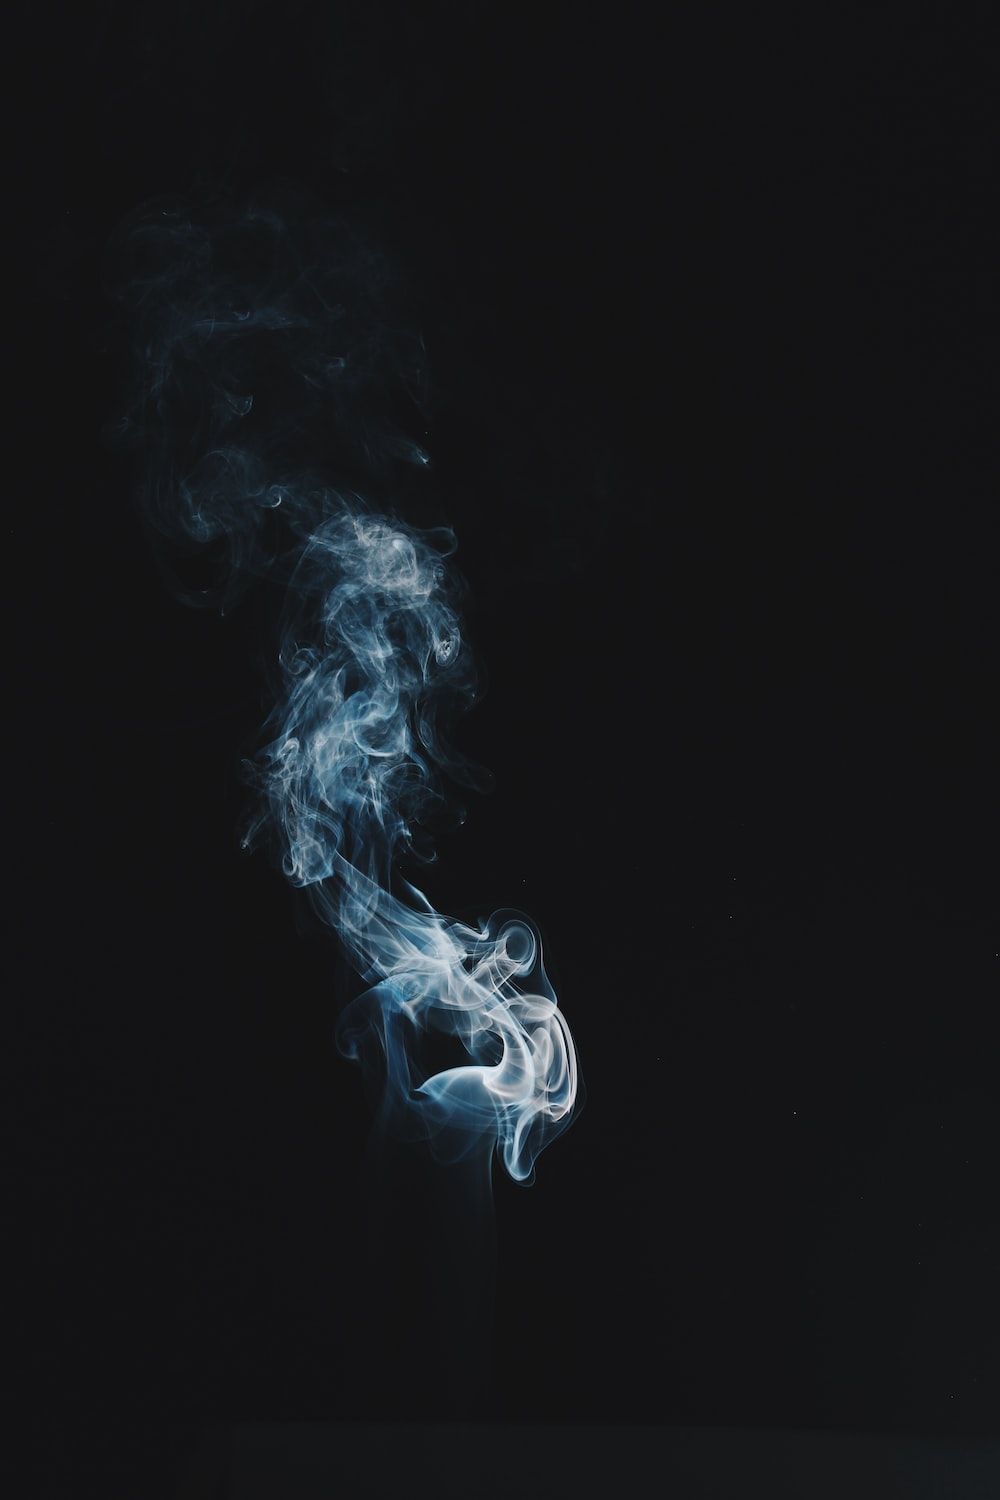 A photo of smoke on a black background - Smoke